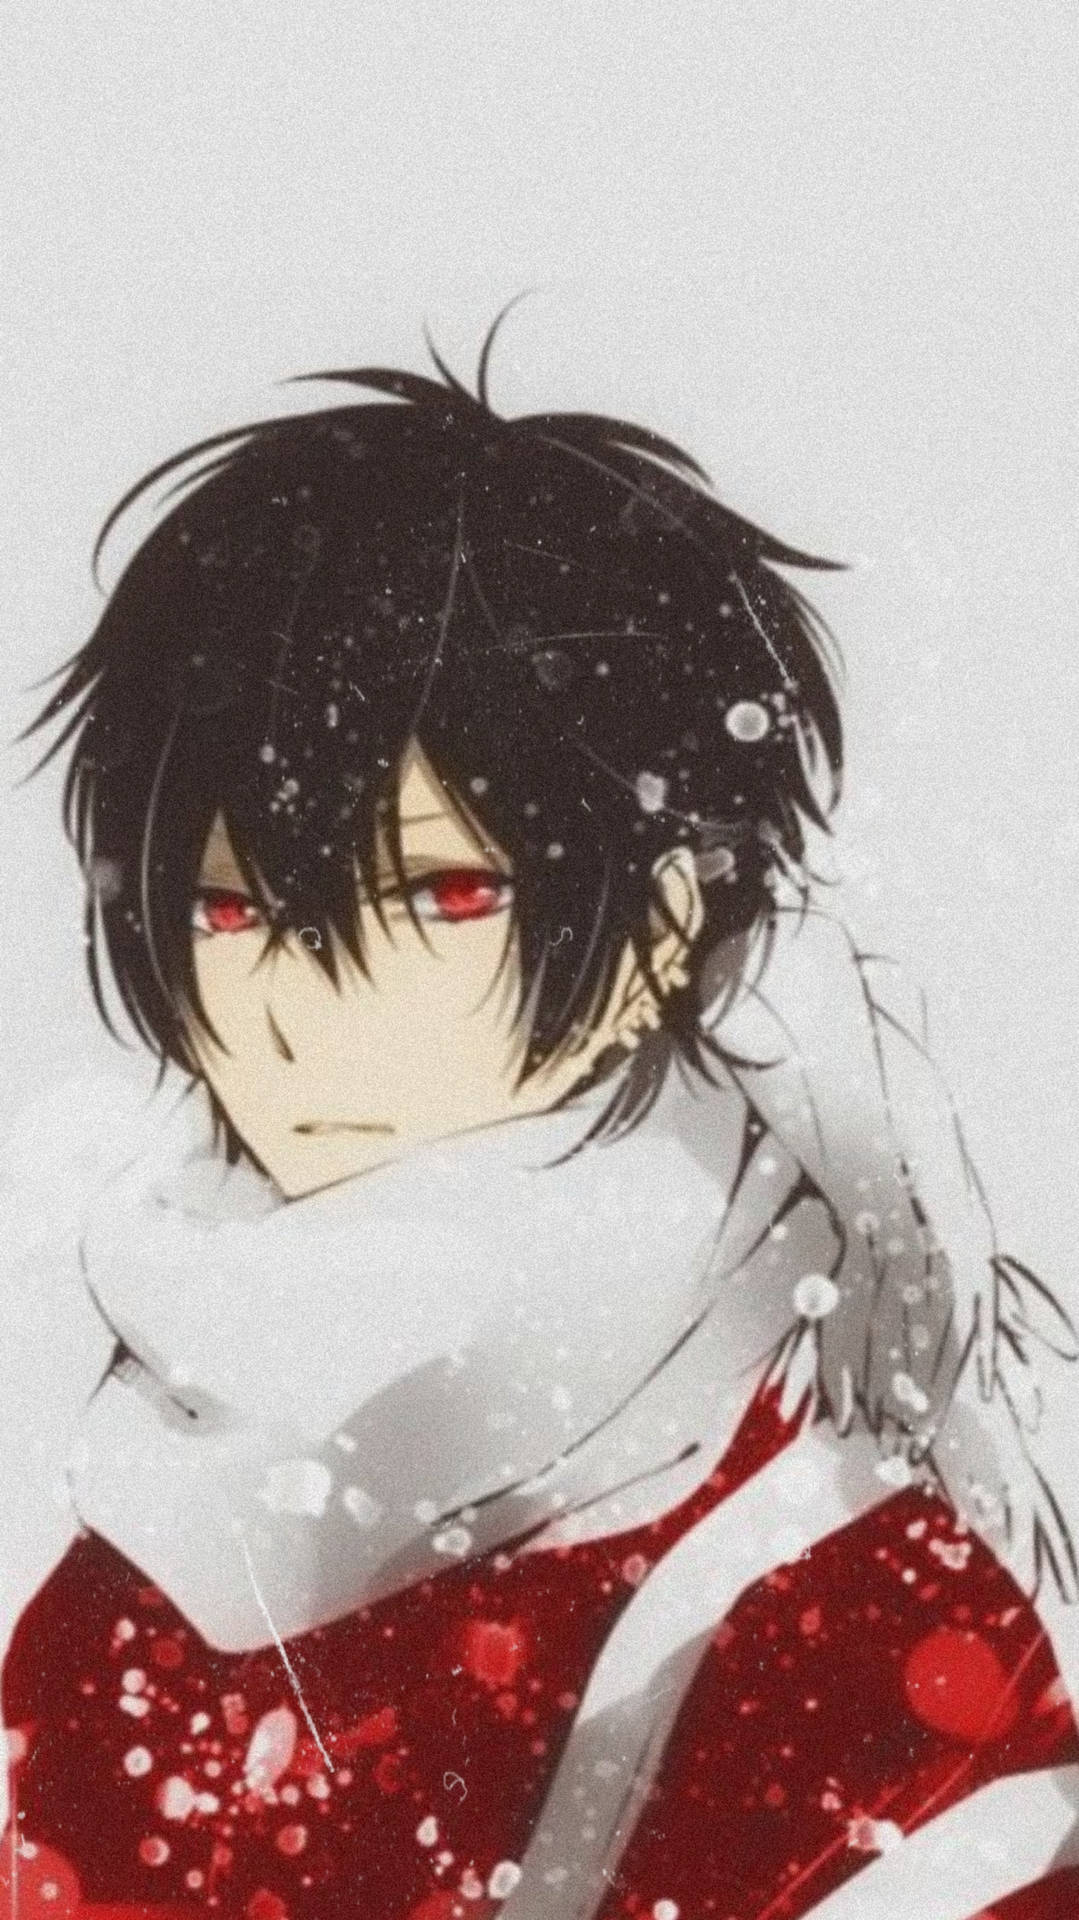 Anime Sad Boy Cartoon On Gloomy Winter Background